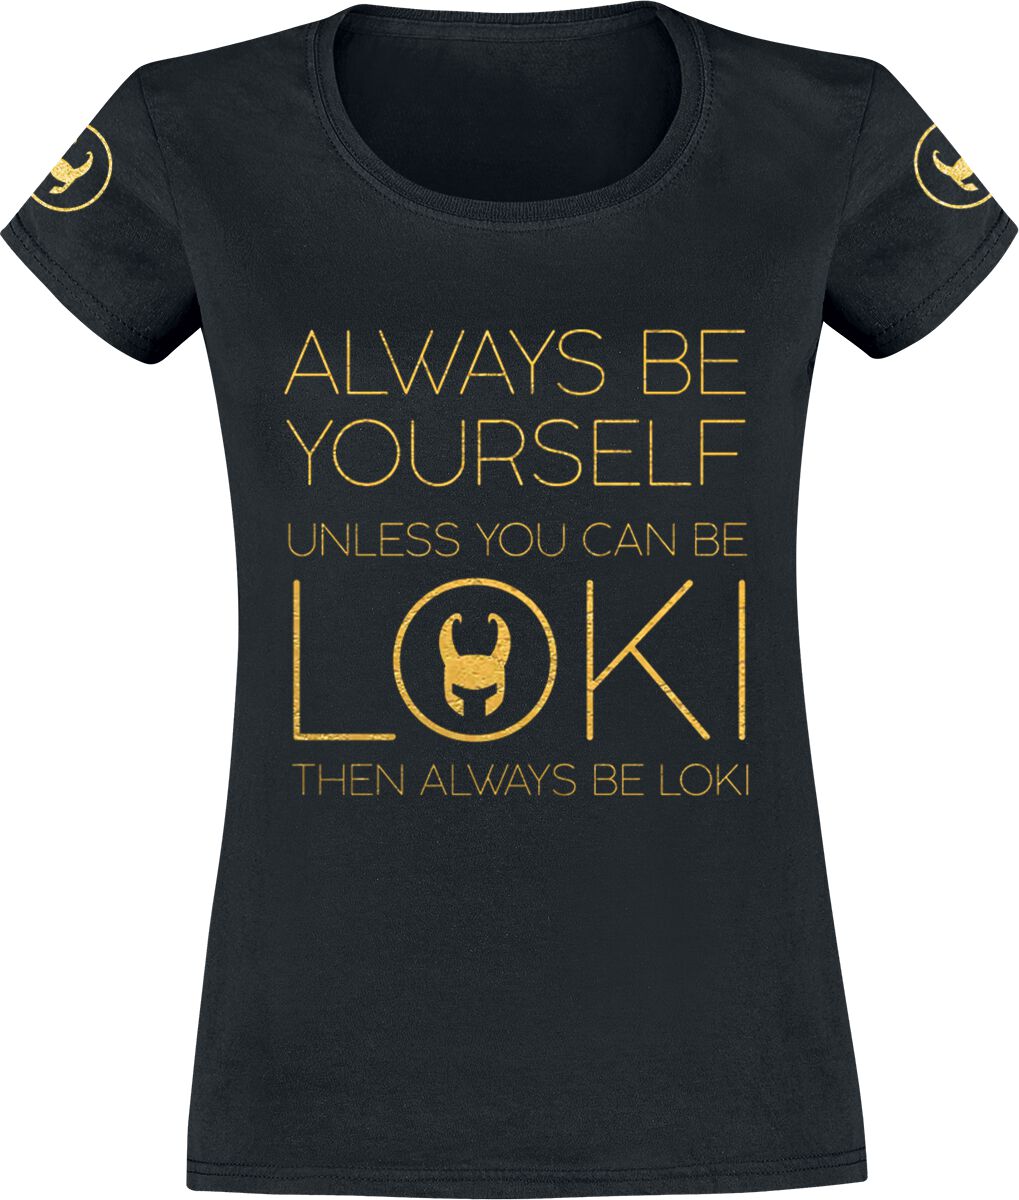 Loki Always Be Yourself T-Shirt schwarz in M